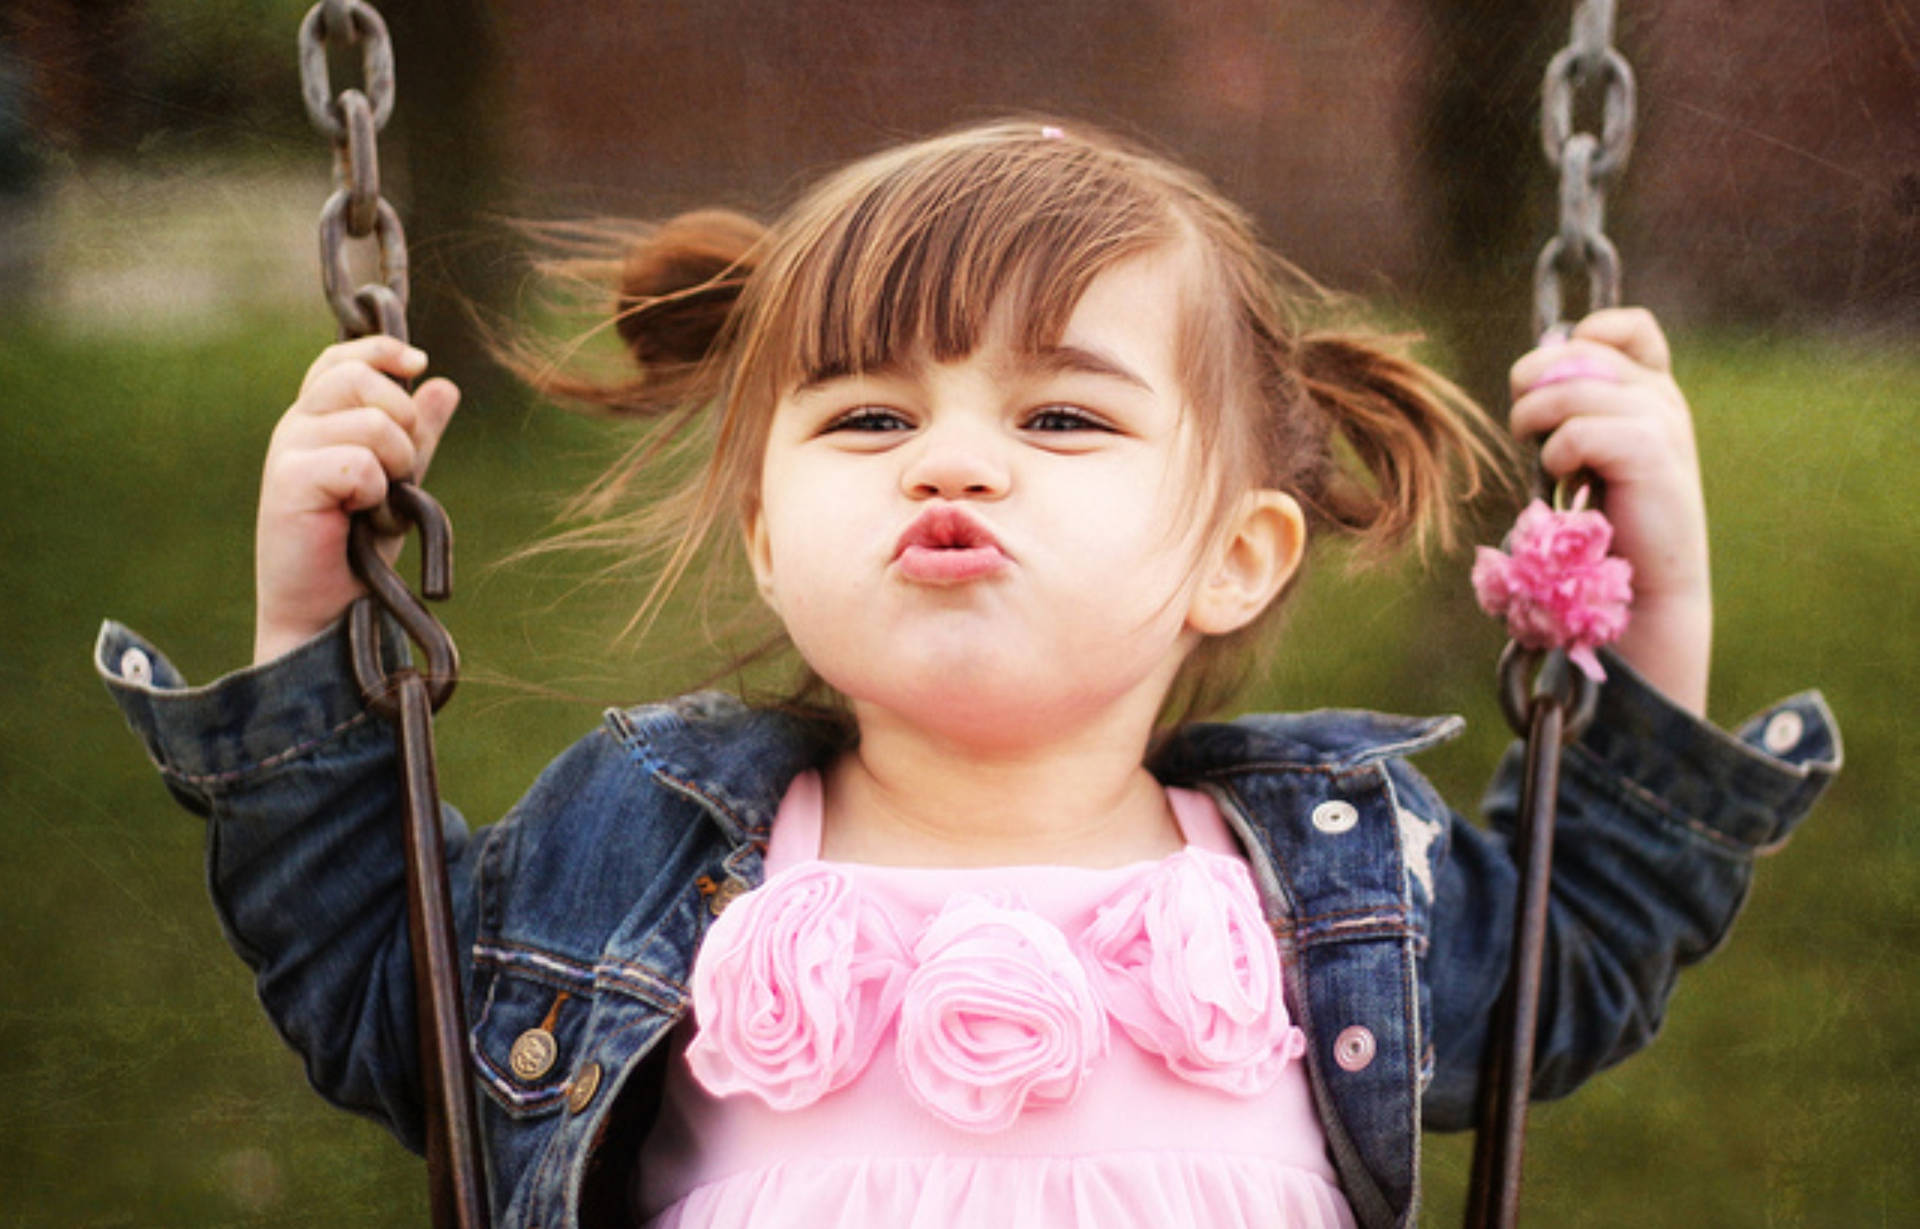 Pouting Lips Cute Baby Girl Wallpaper